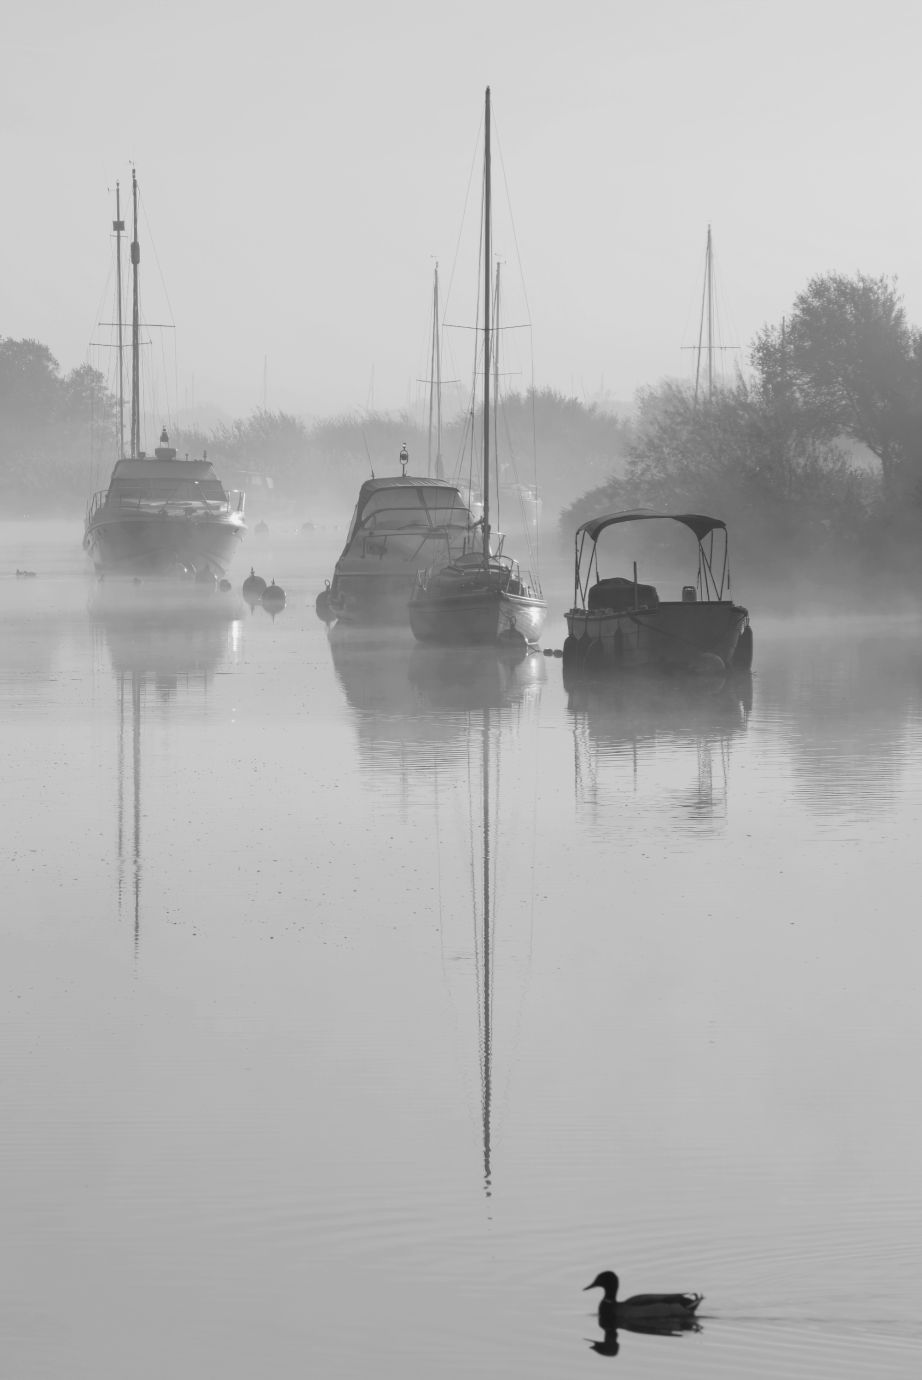 River-Frome-boats-mist-reflections-Wareham-Dorset-6231-03112021